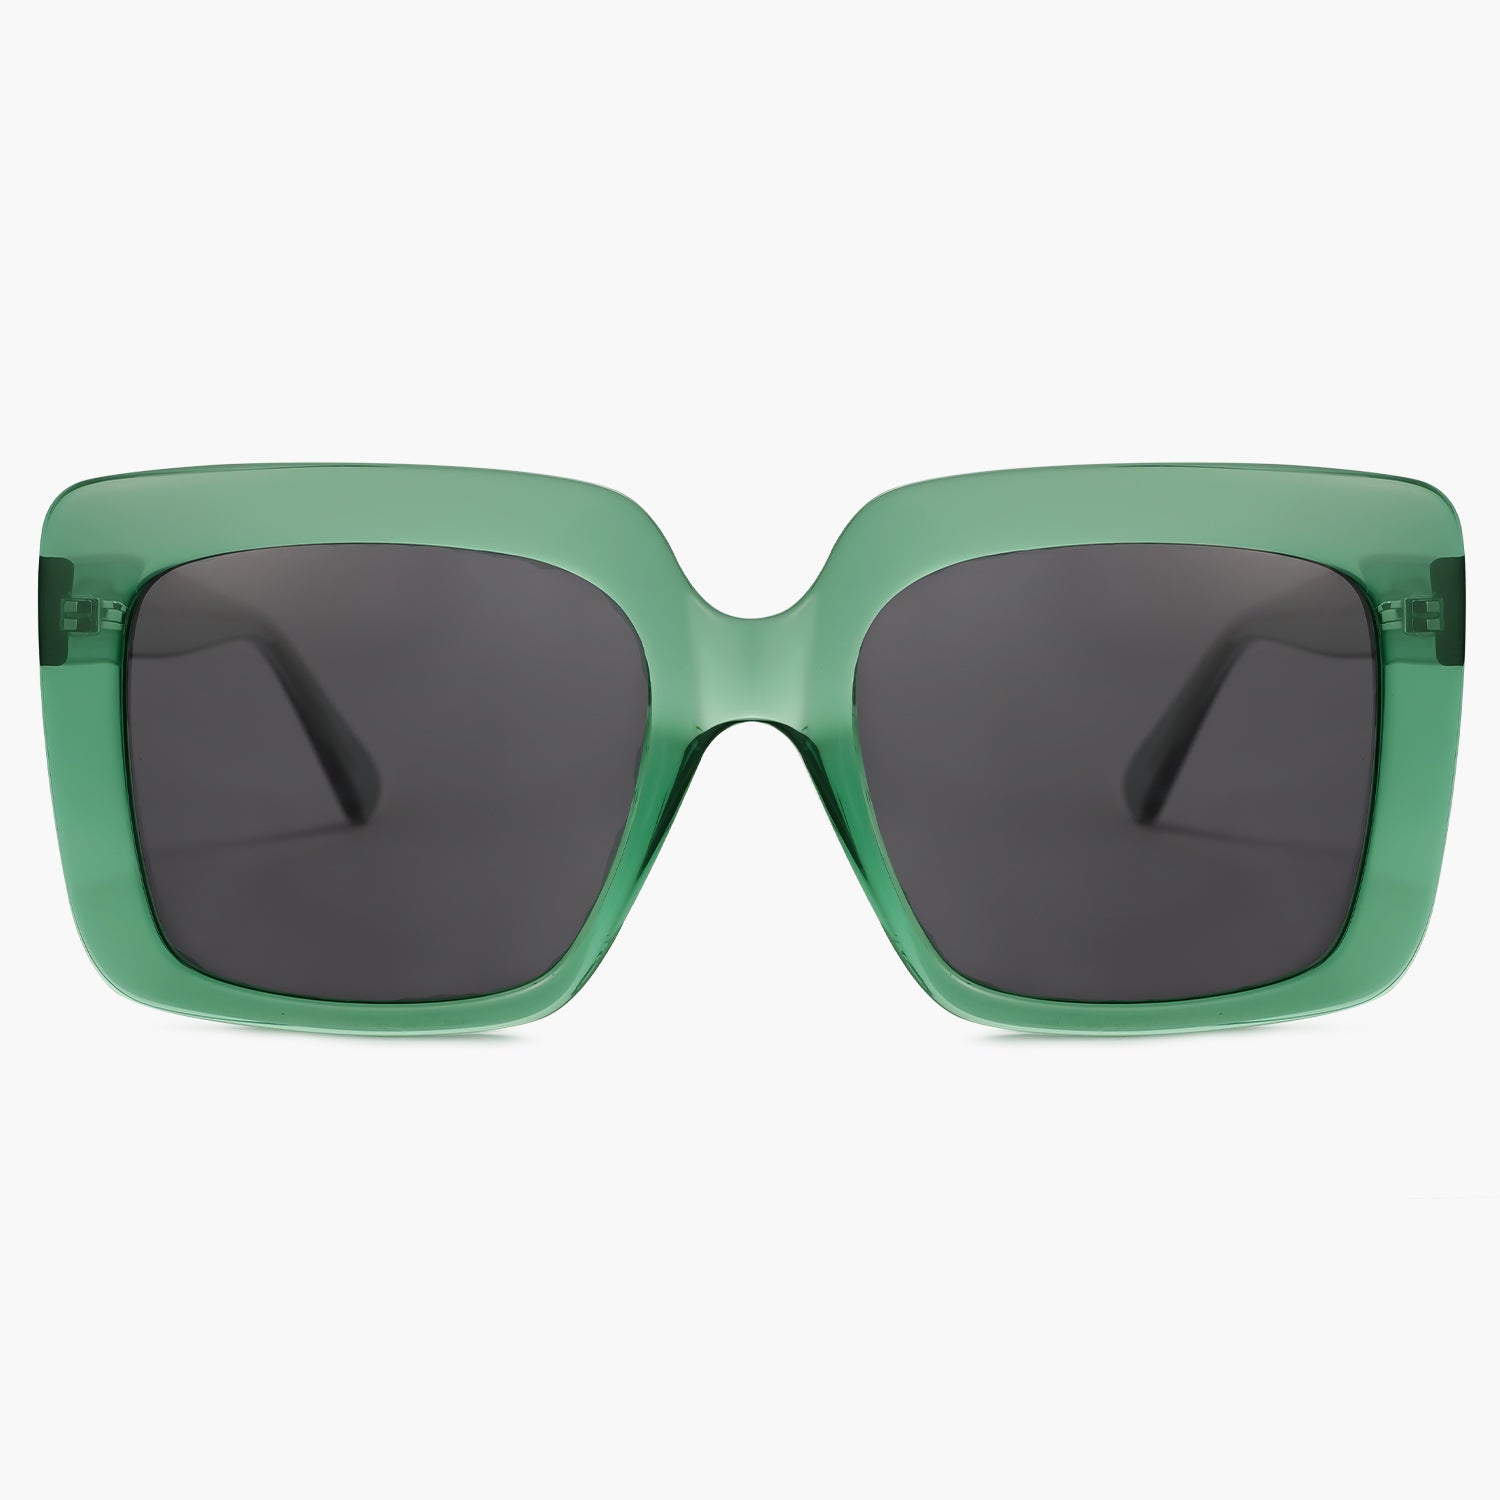 DEJA Green Oversized Square Sunglasses